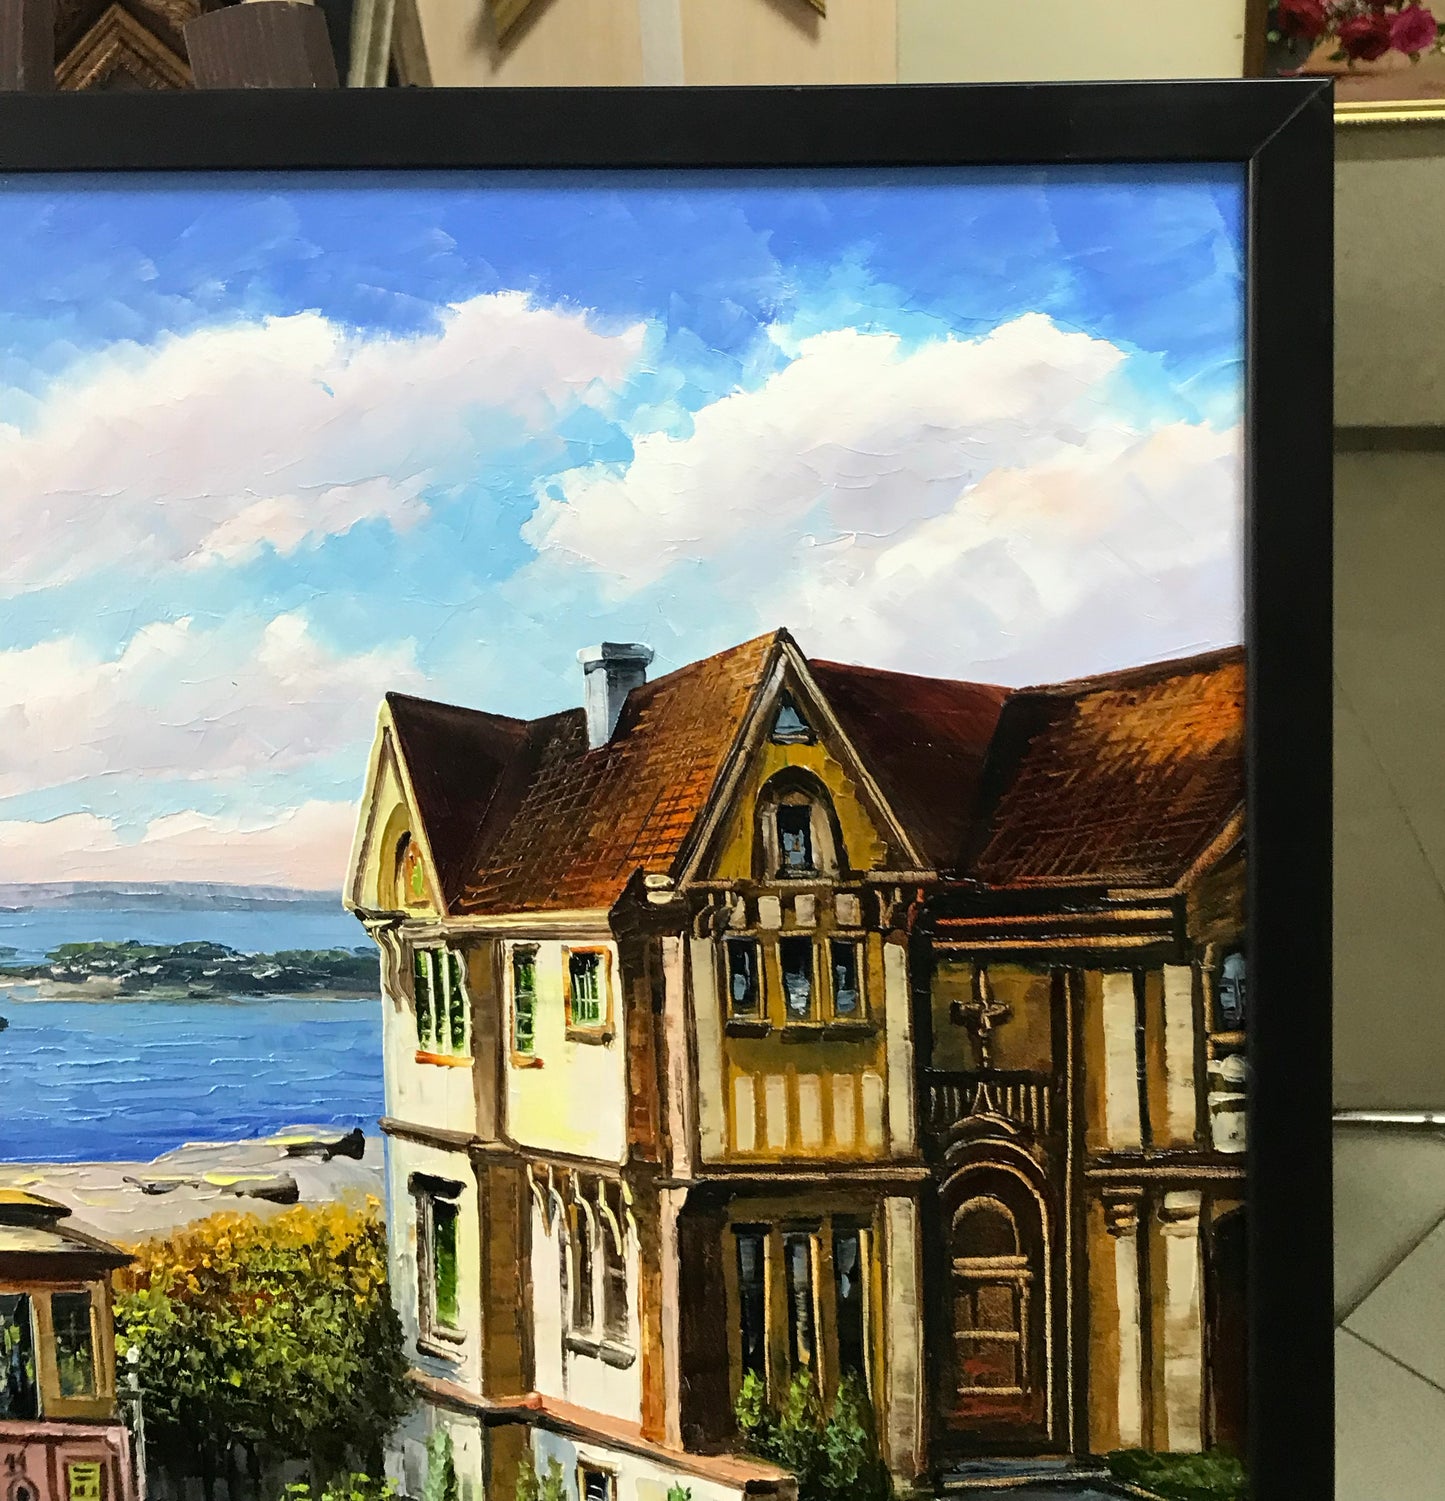 San Francisco Cable Car Painting, Alcatraz Island Canvas Art, California Landscape Oil Painting